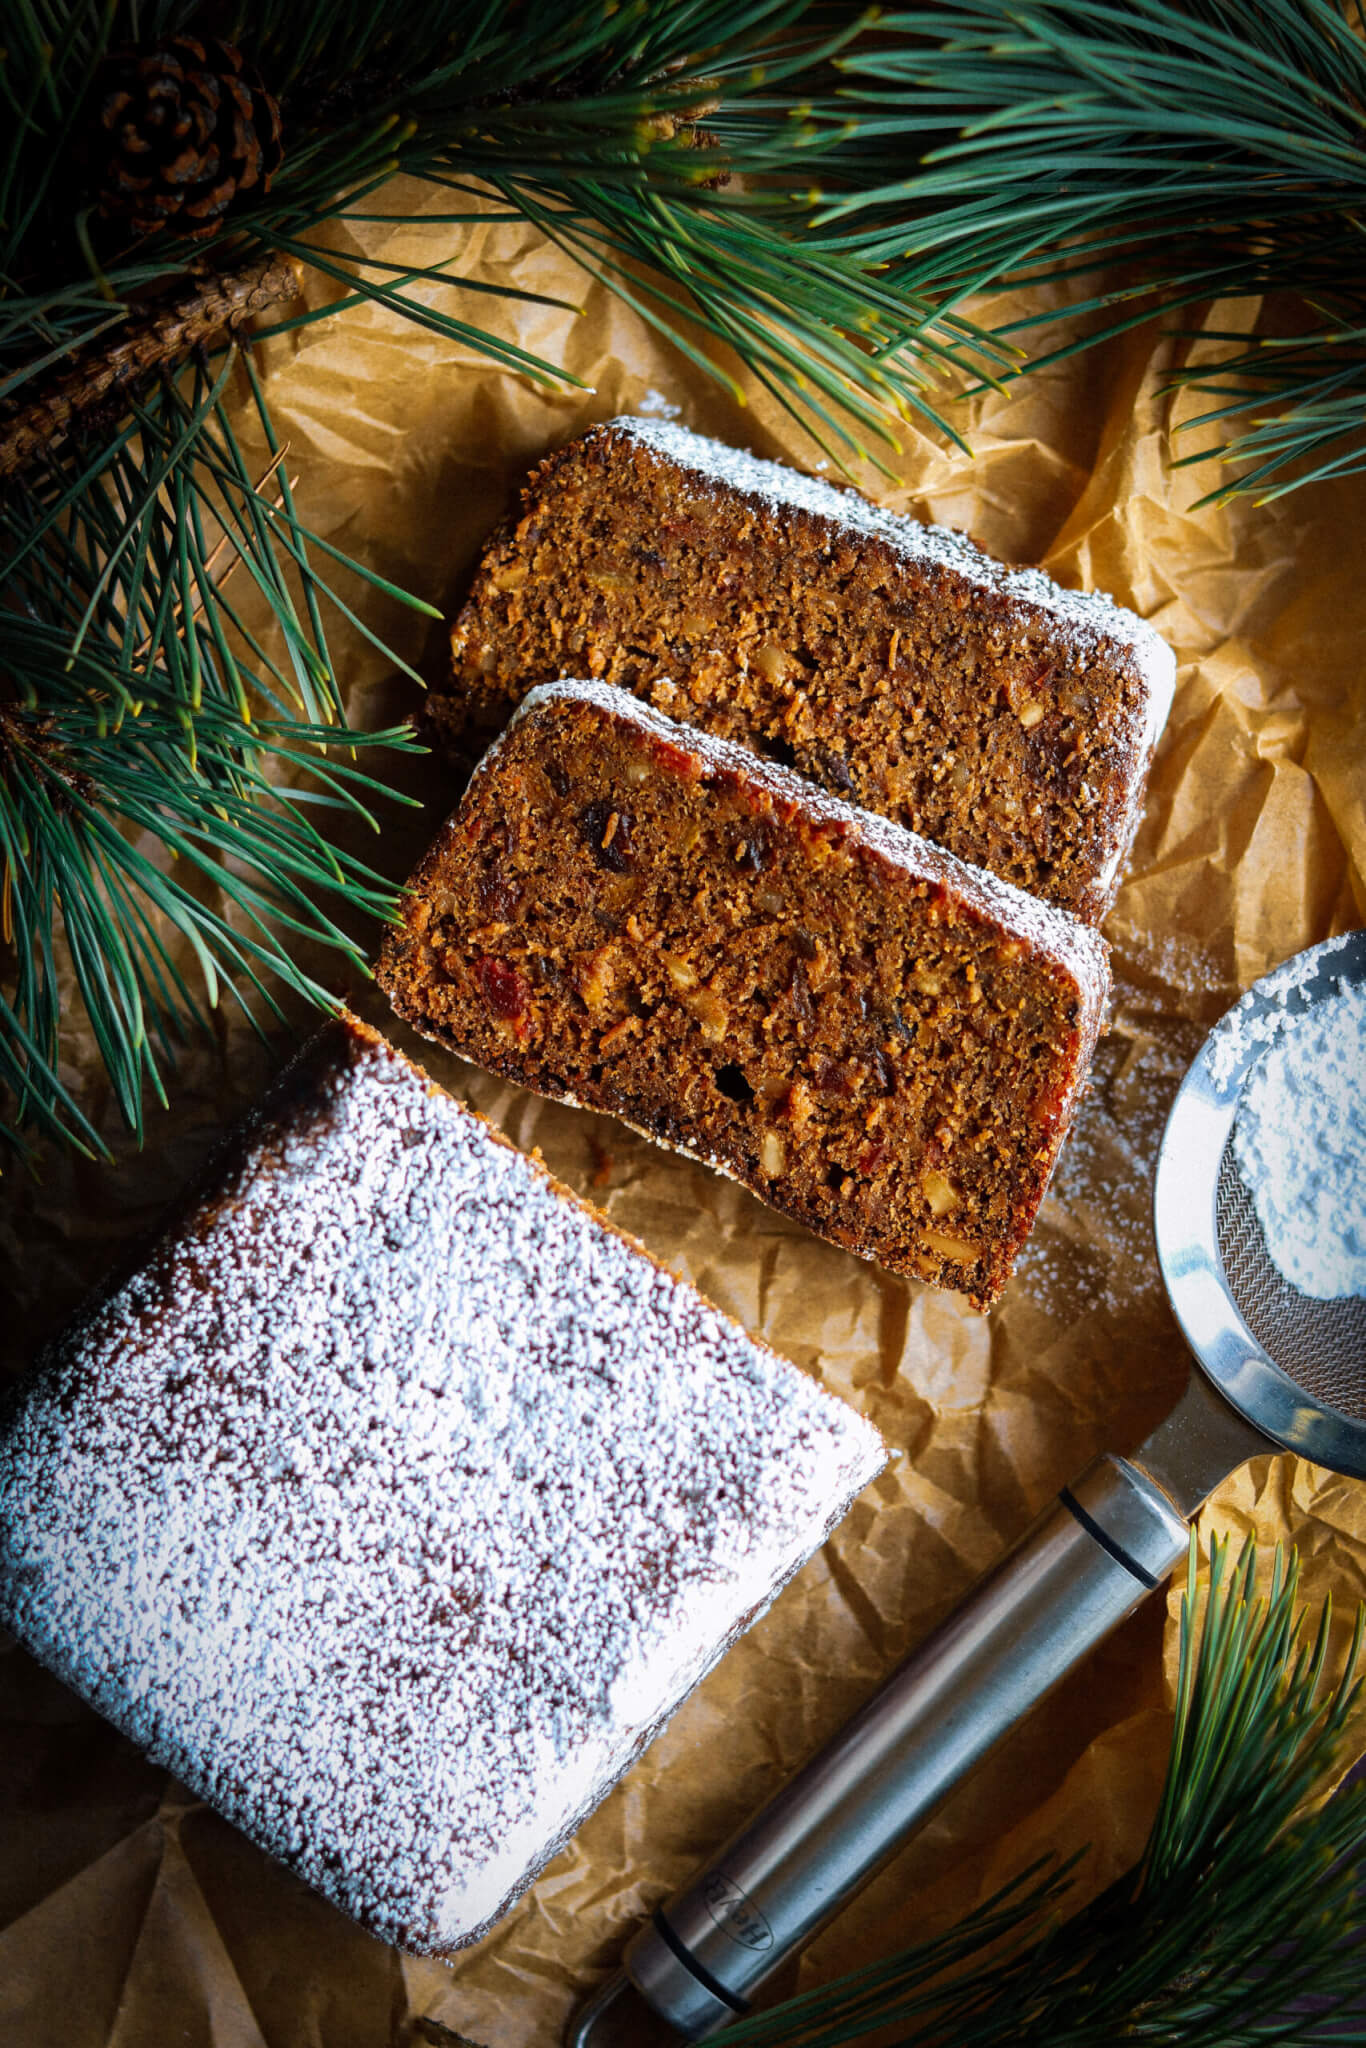 Plum Cake Recipe: How to make Christmas Plum Cake at Home | Homemade Rich Plum  Cake Recipe - Times Food